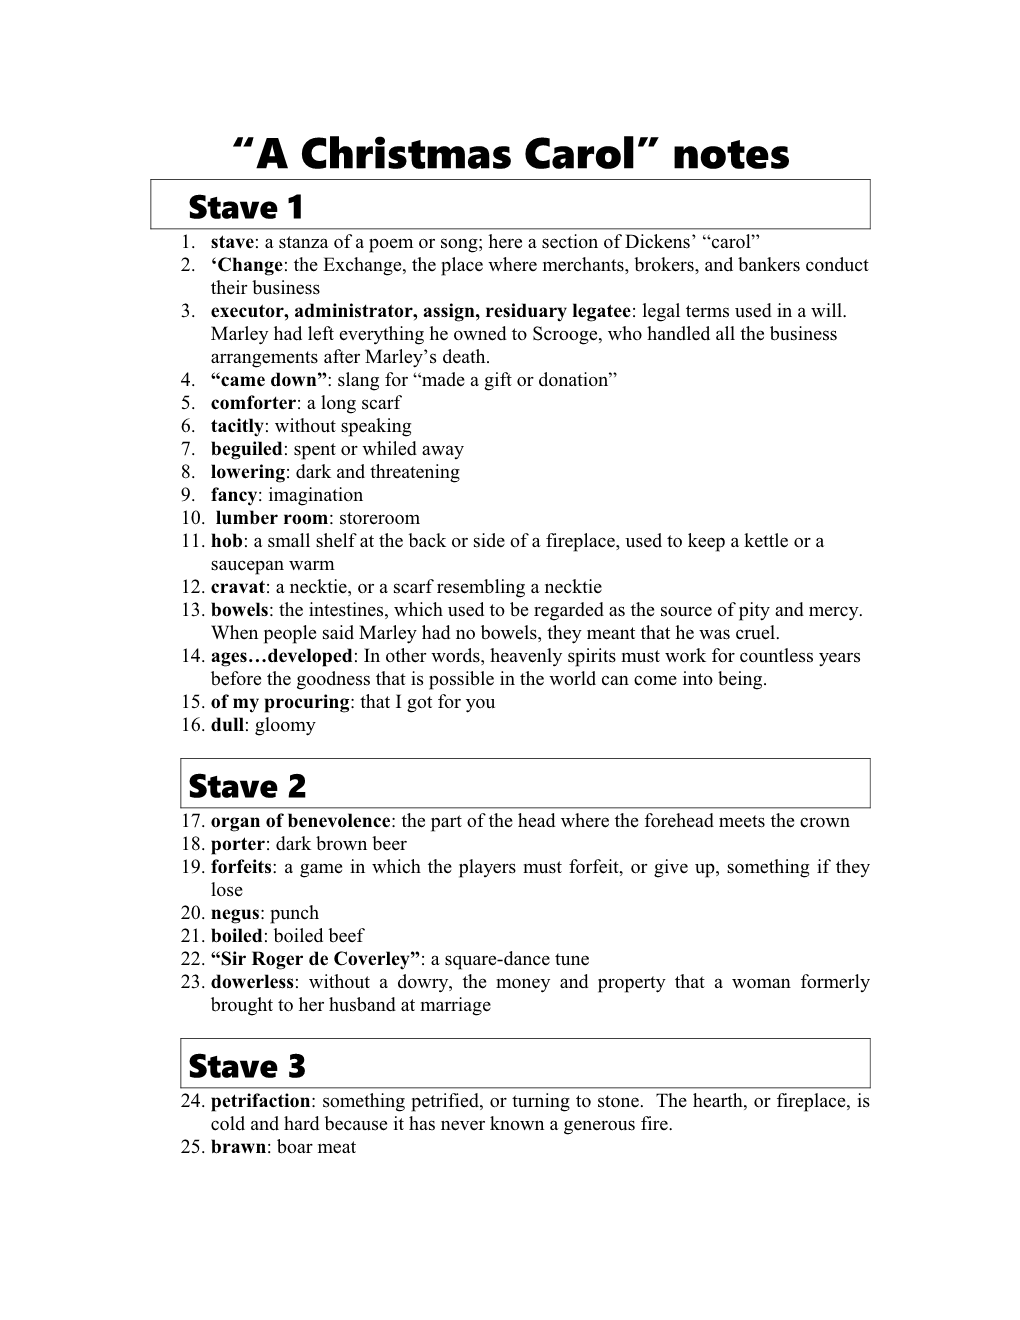 A Christmas Carol Notes